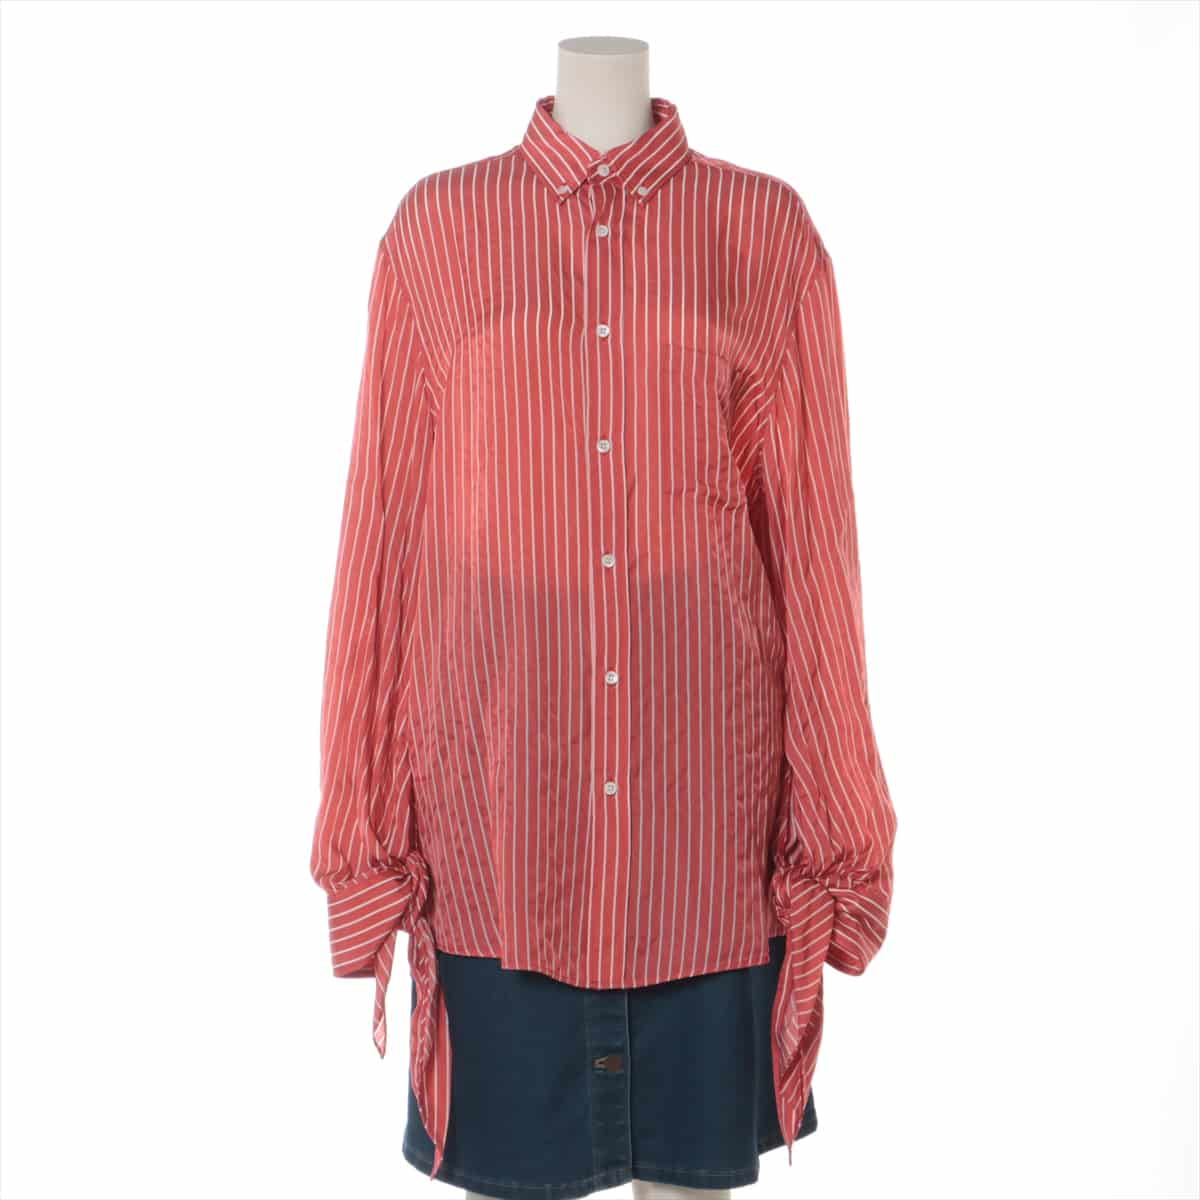 Balenciaga 17 years Cuprammonium rayon Shirt 34 Ladies' Red x white  stripes 492277 ribbon sleeve